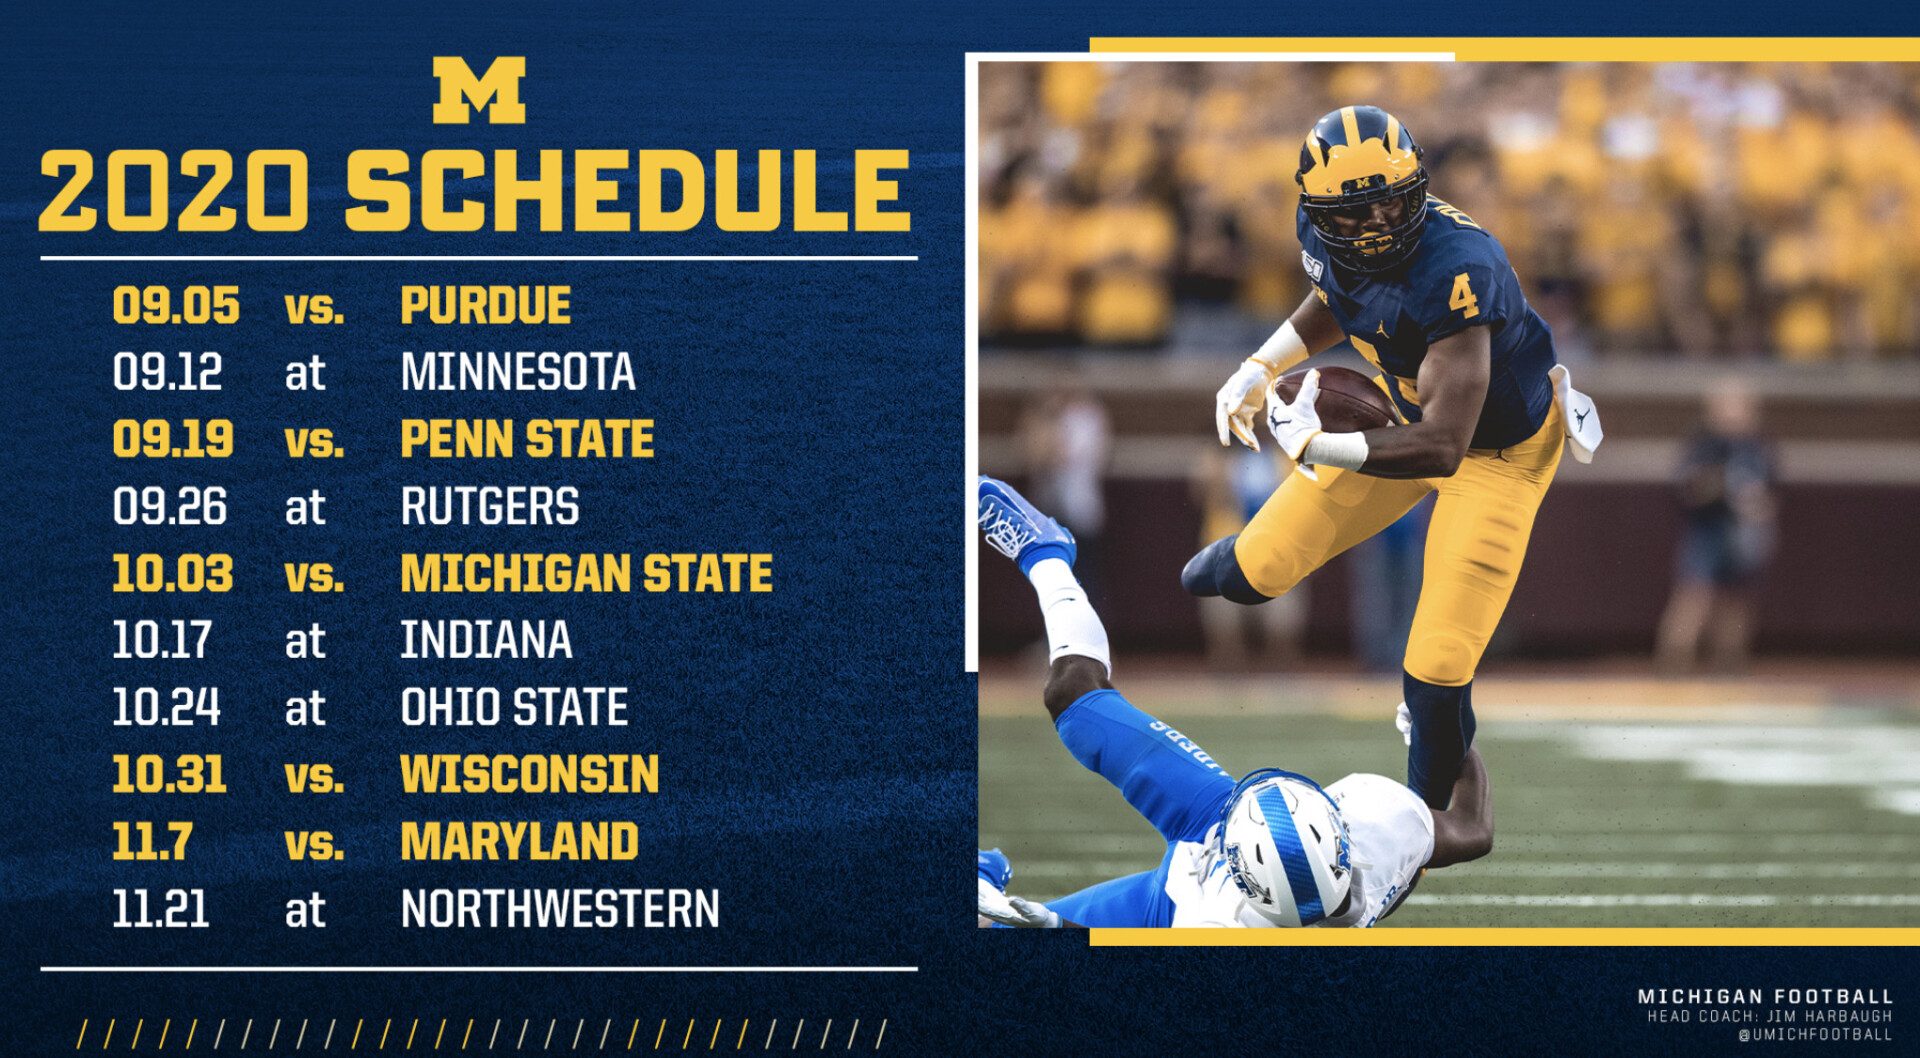 U of M: Michigan's 2020 football schedule includes October game vs